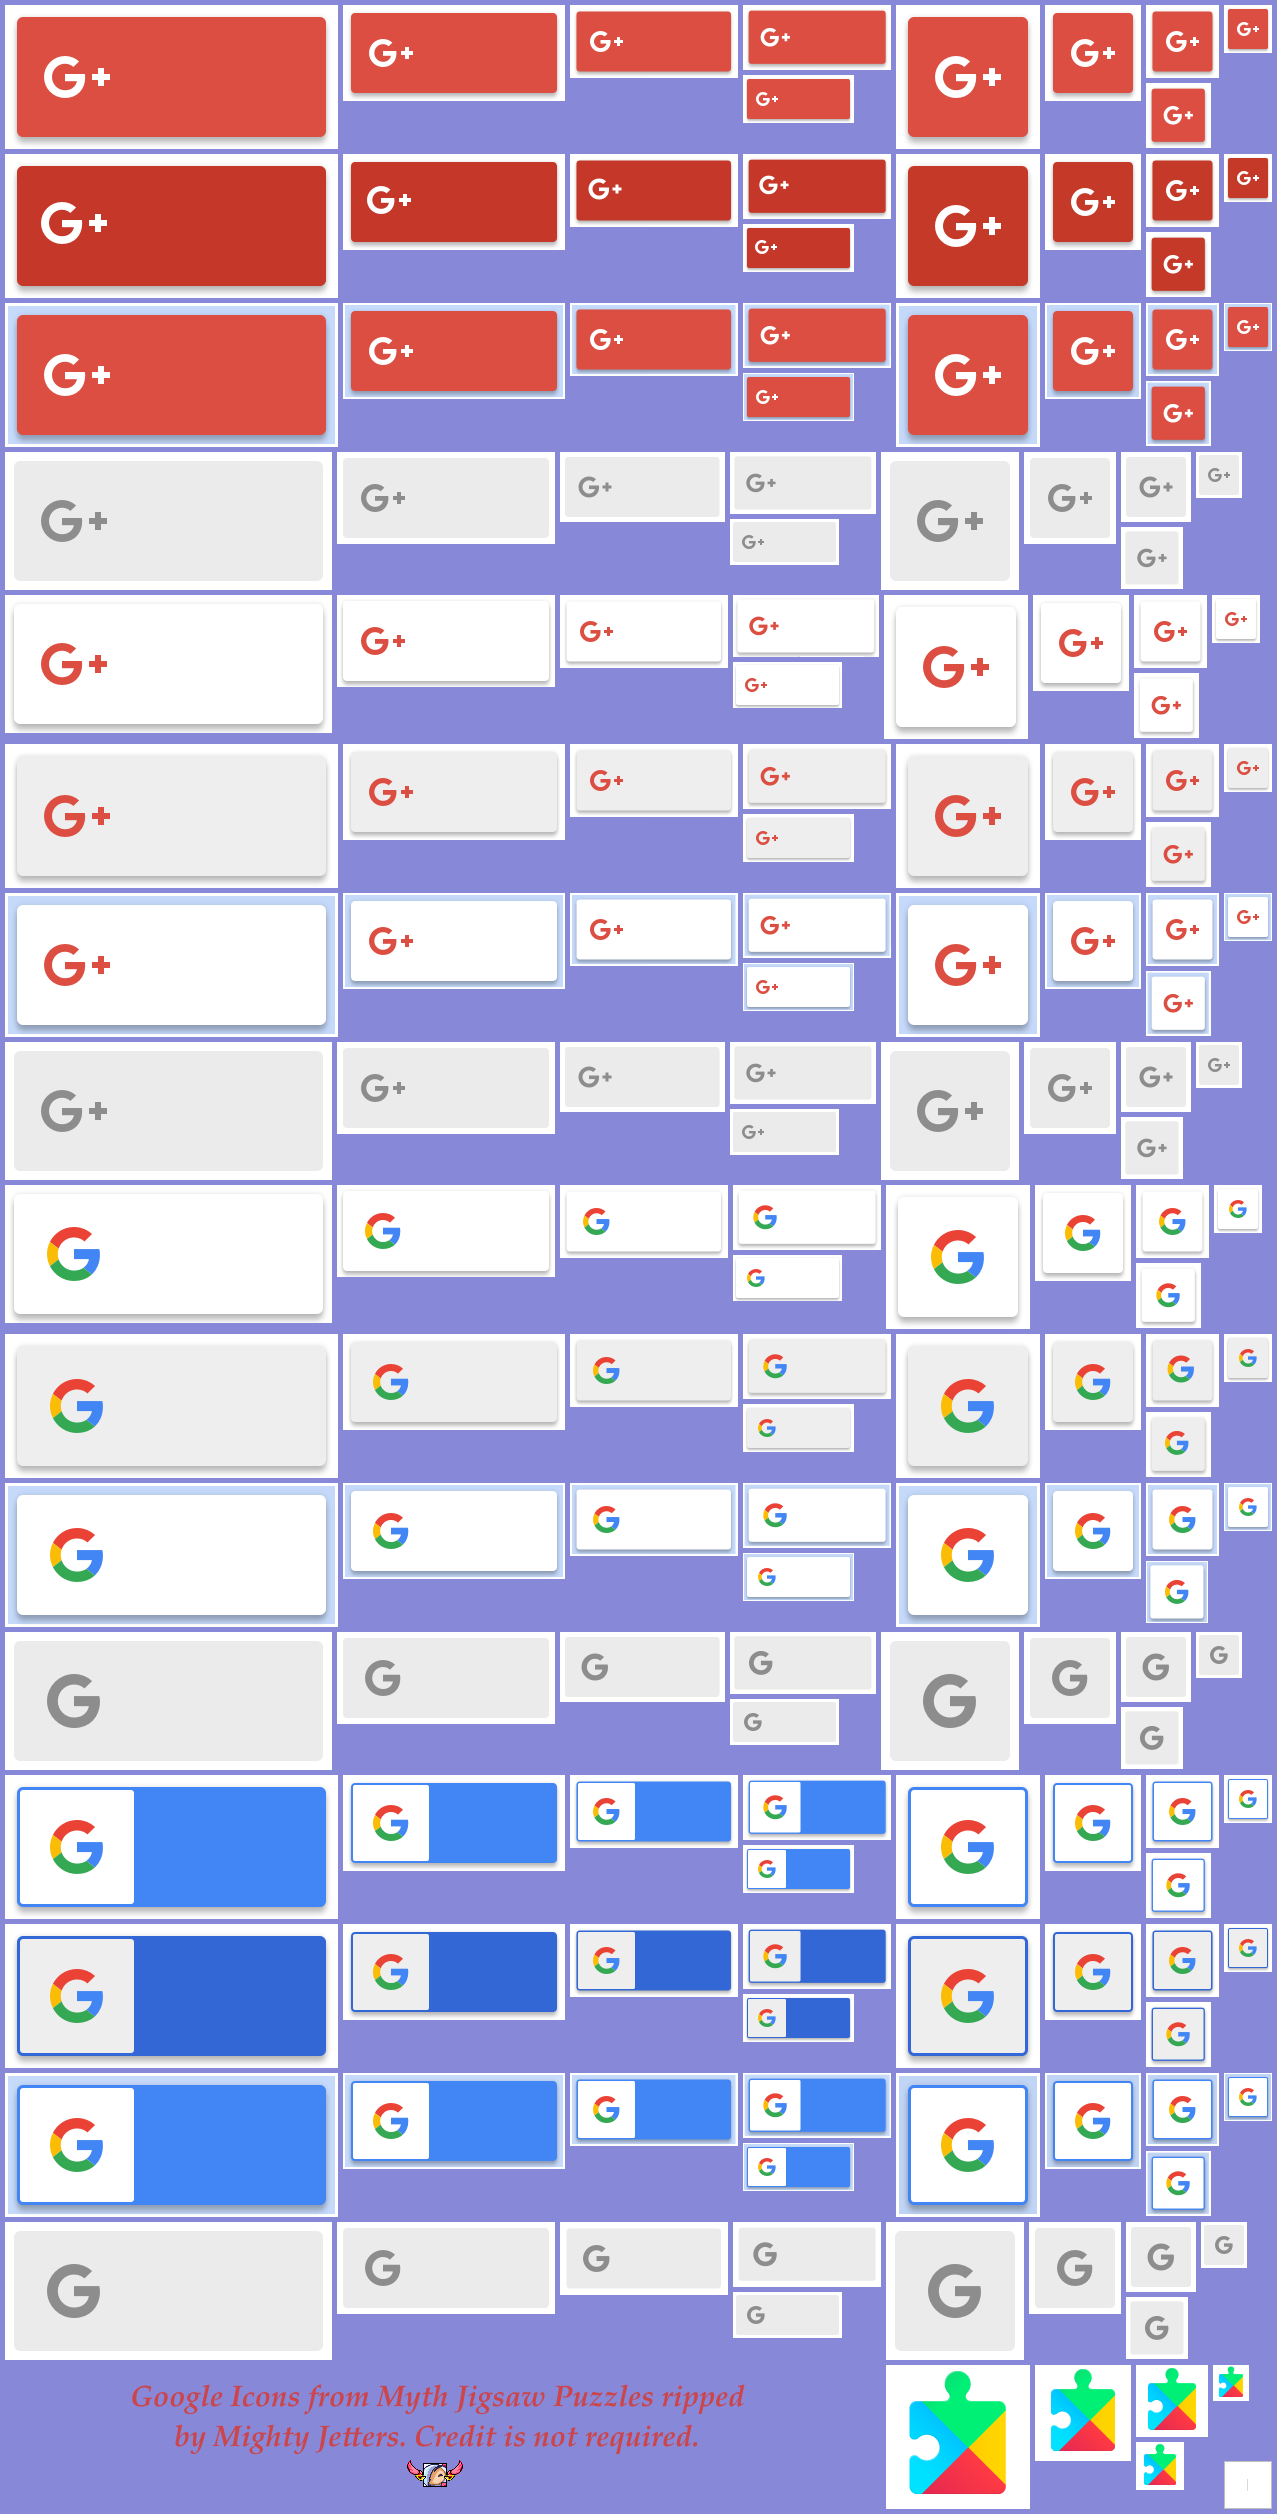 Myth Jigsaw Puzzles - Google Icons